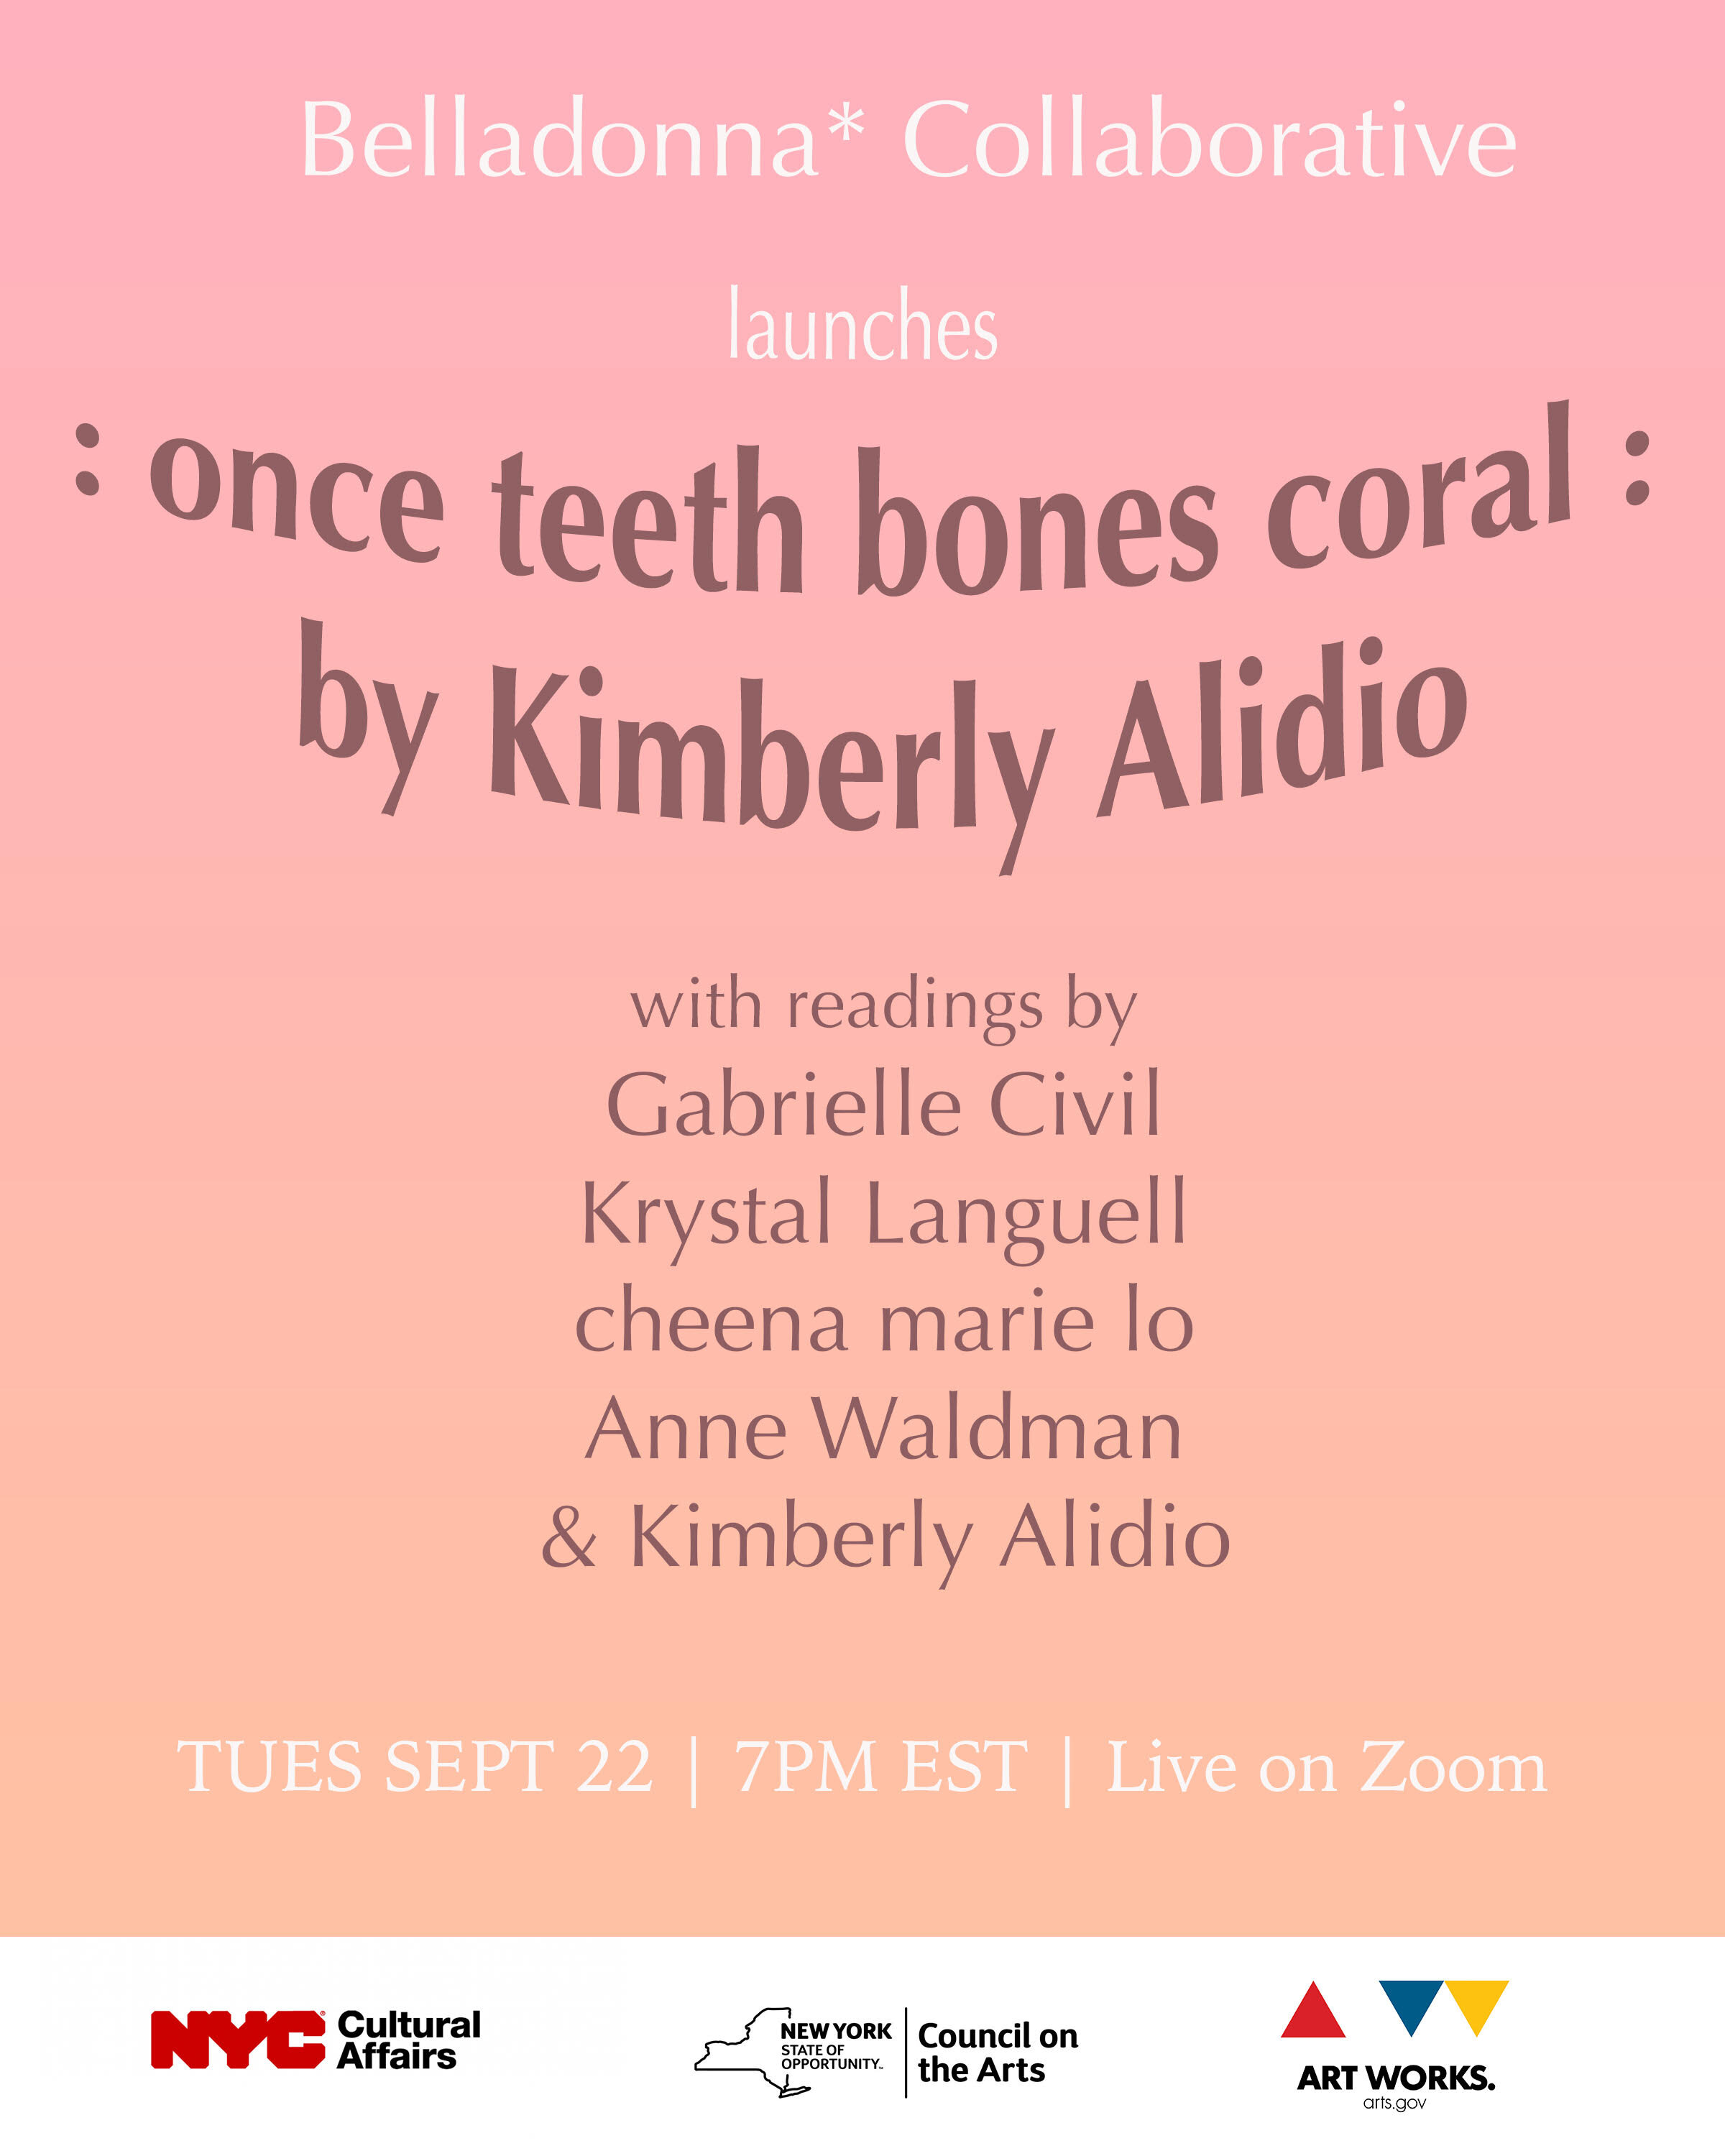   : once teeth bones coral :  Book Launch with Gabrielle Civil + Krystal Languell + cheena marie lo + Anne Waldman for Belladonna*. 